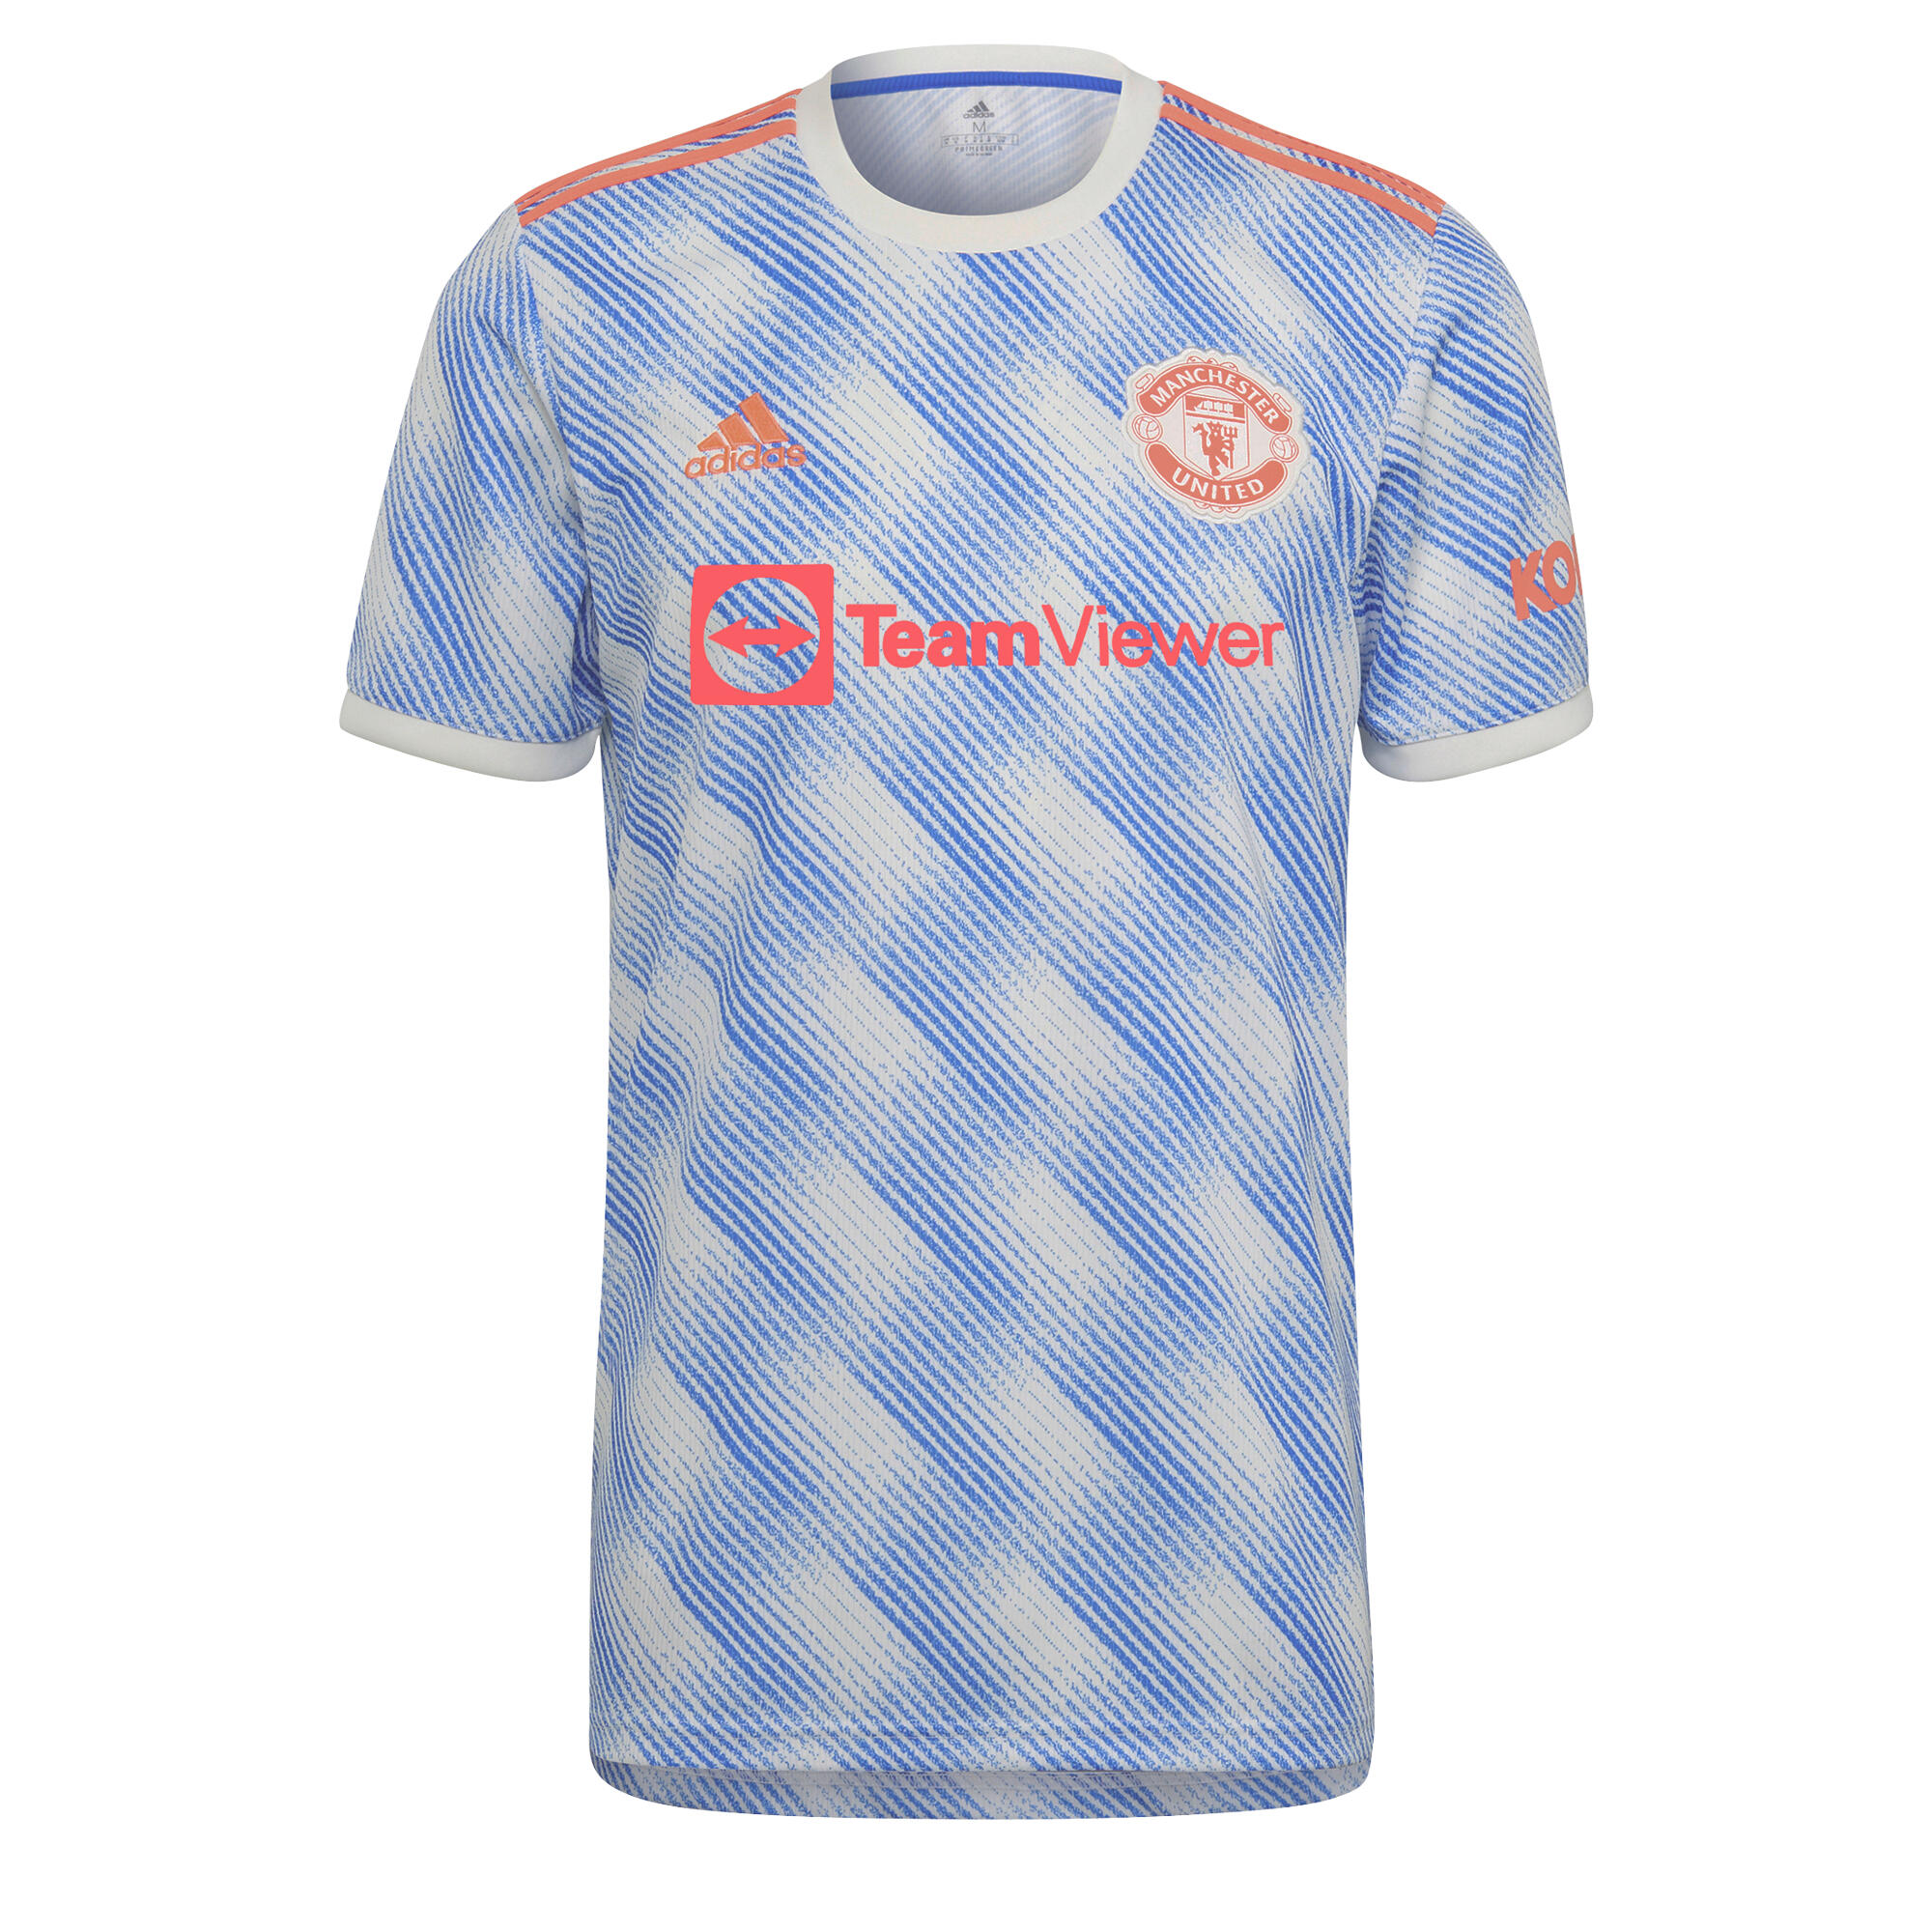 ADIDAS Adult Football Shirt - Manchester United Away 21/22